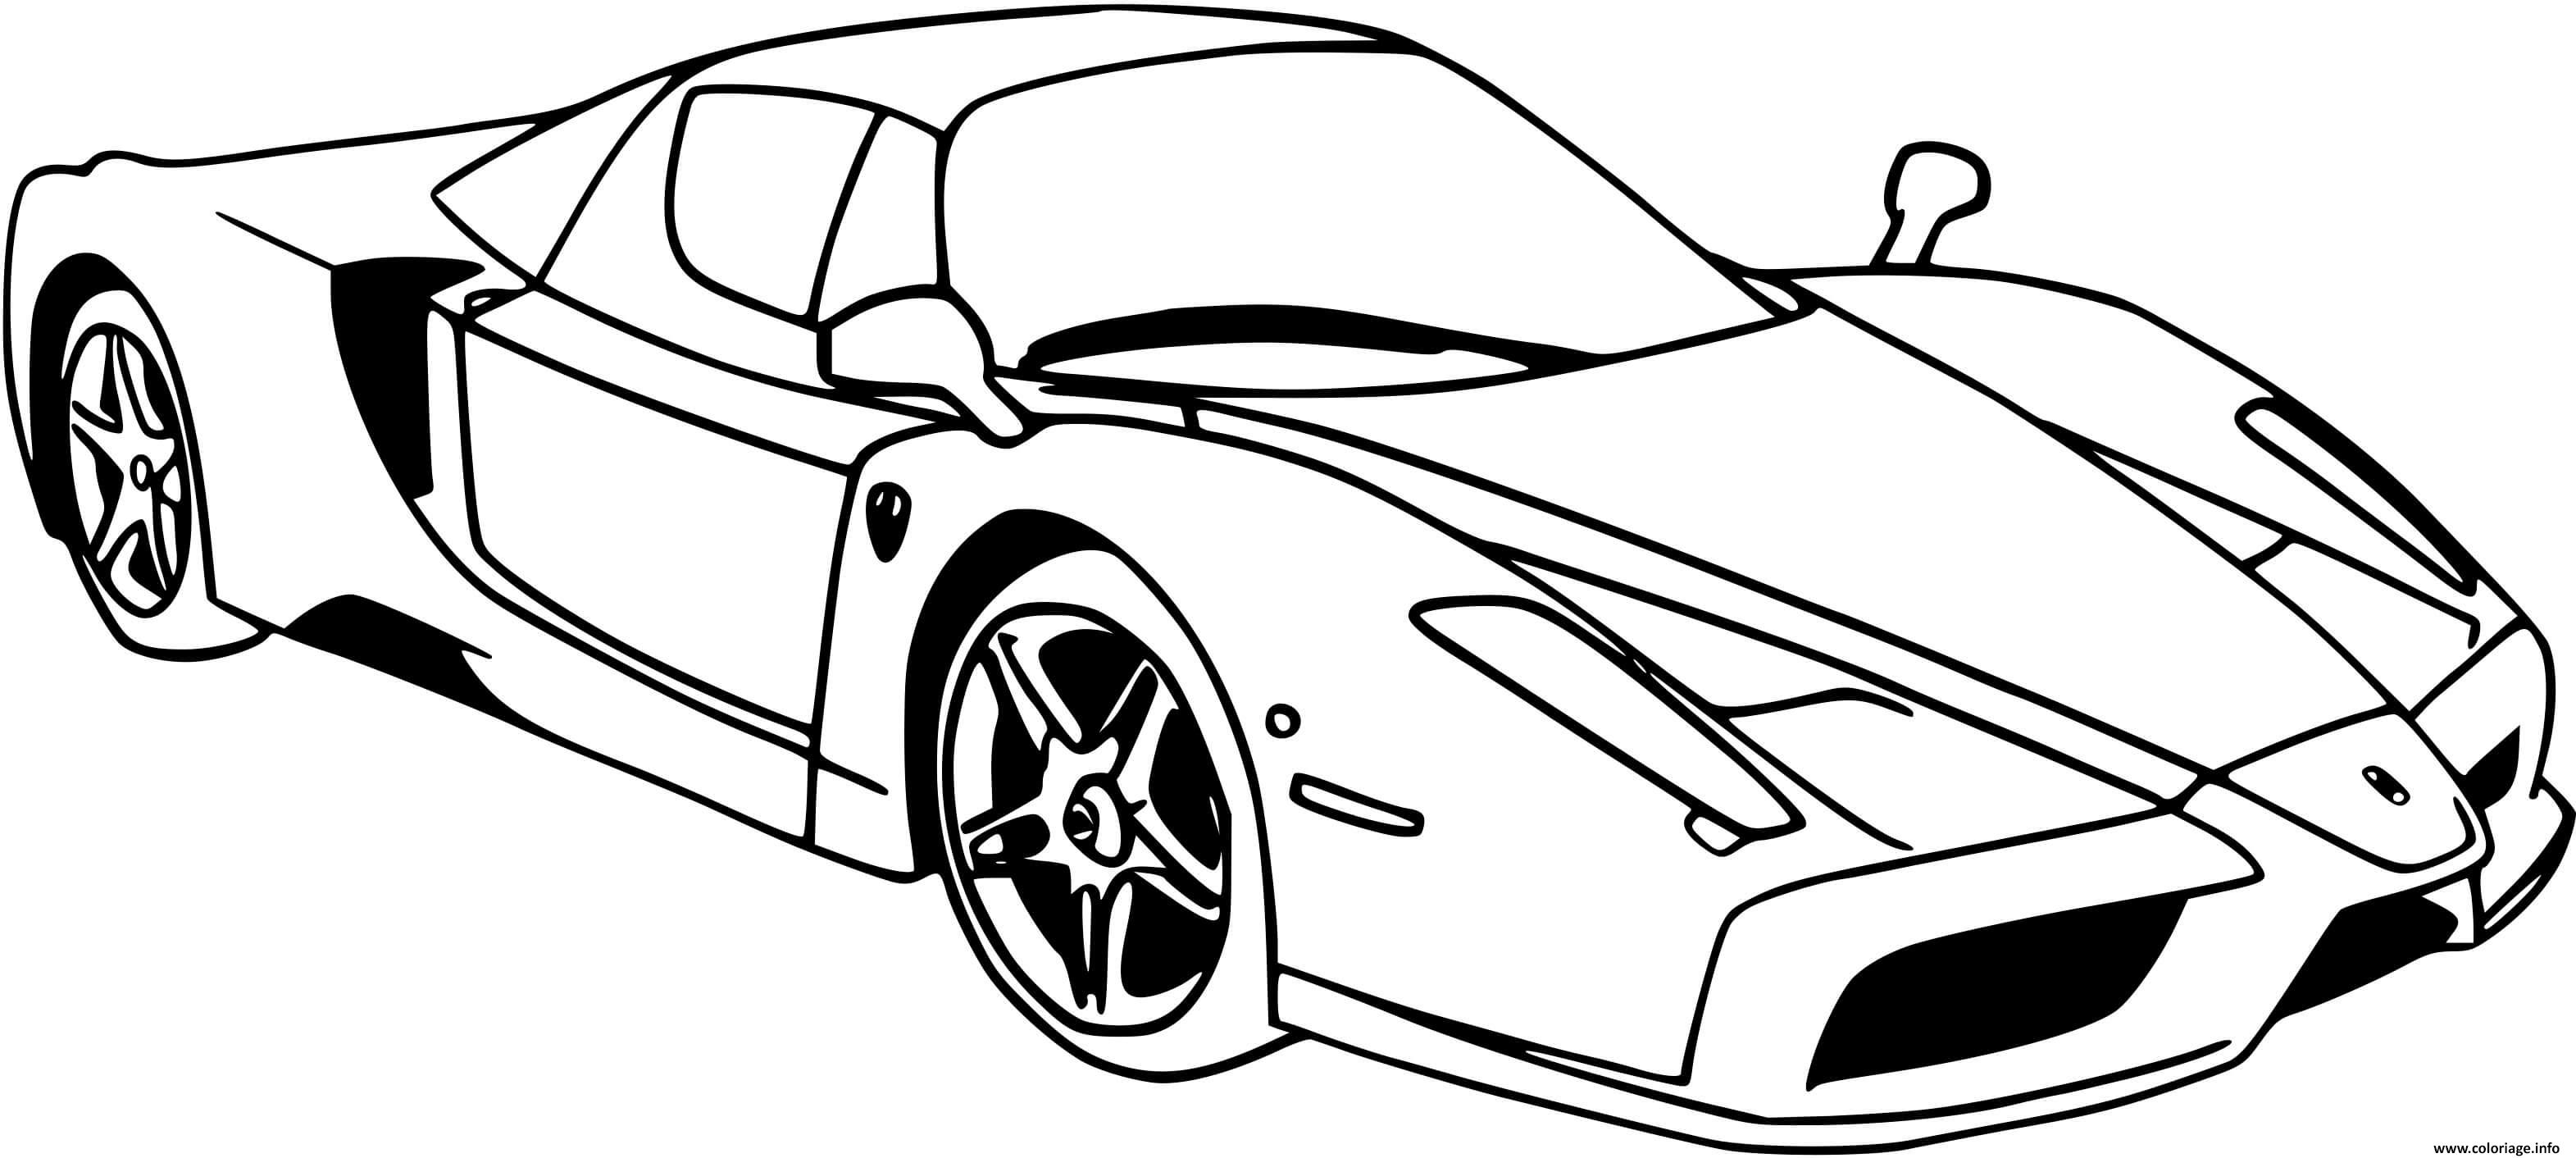 Coloriage dessin Voiture Ferrari - JeColorie.com